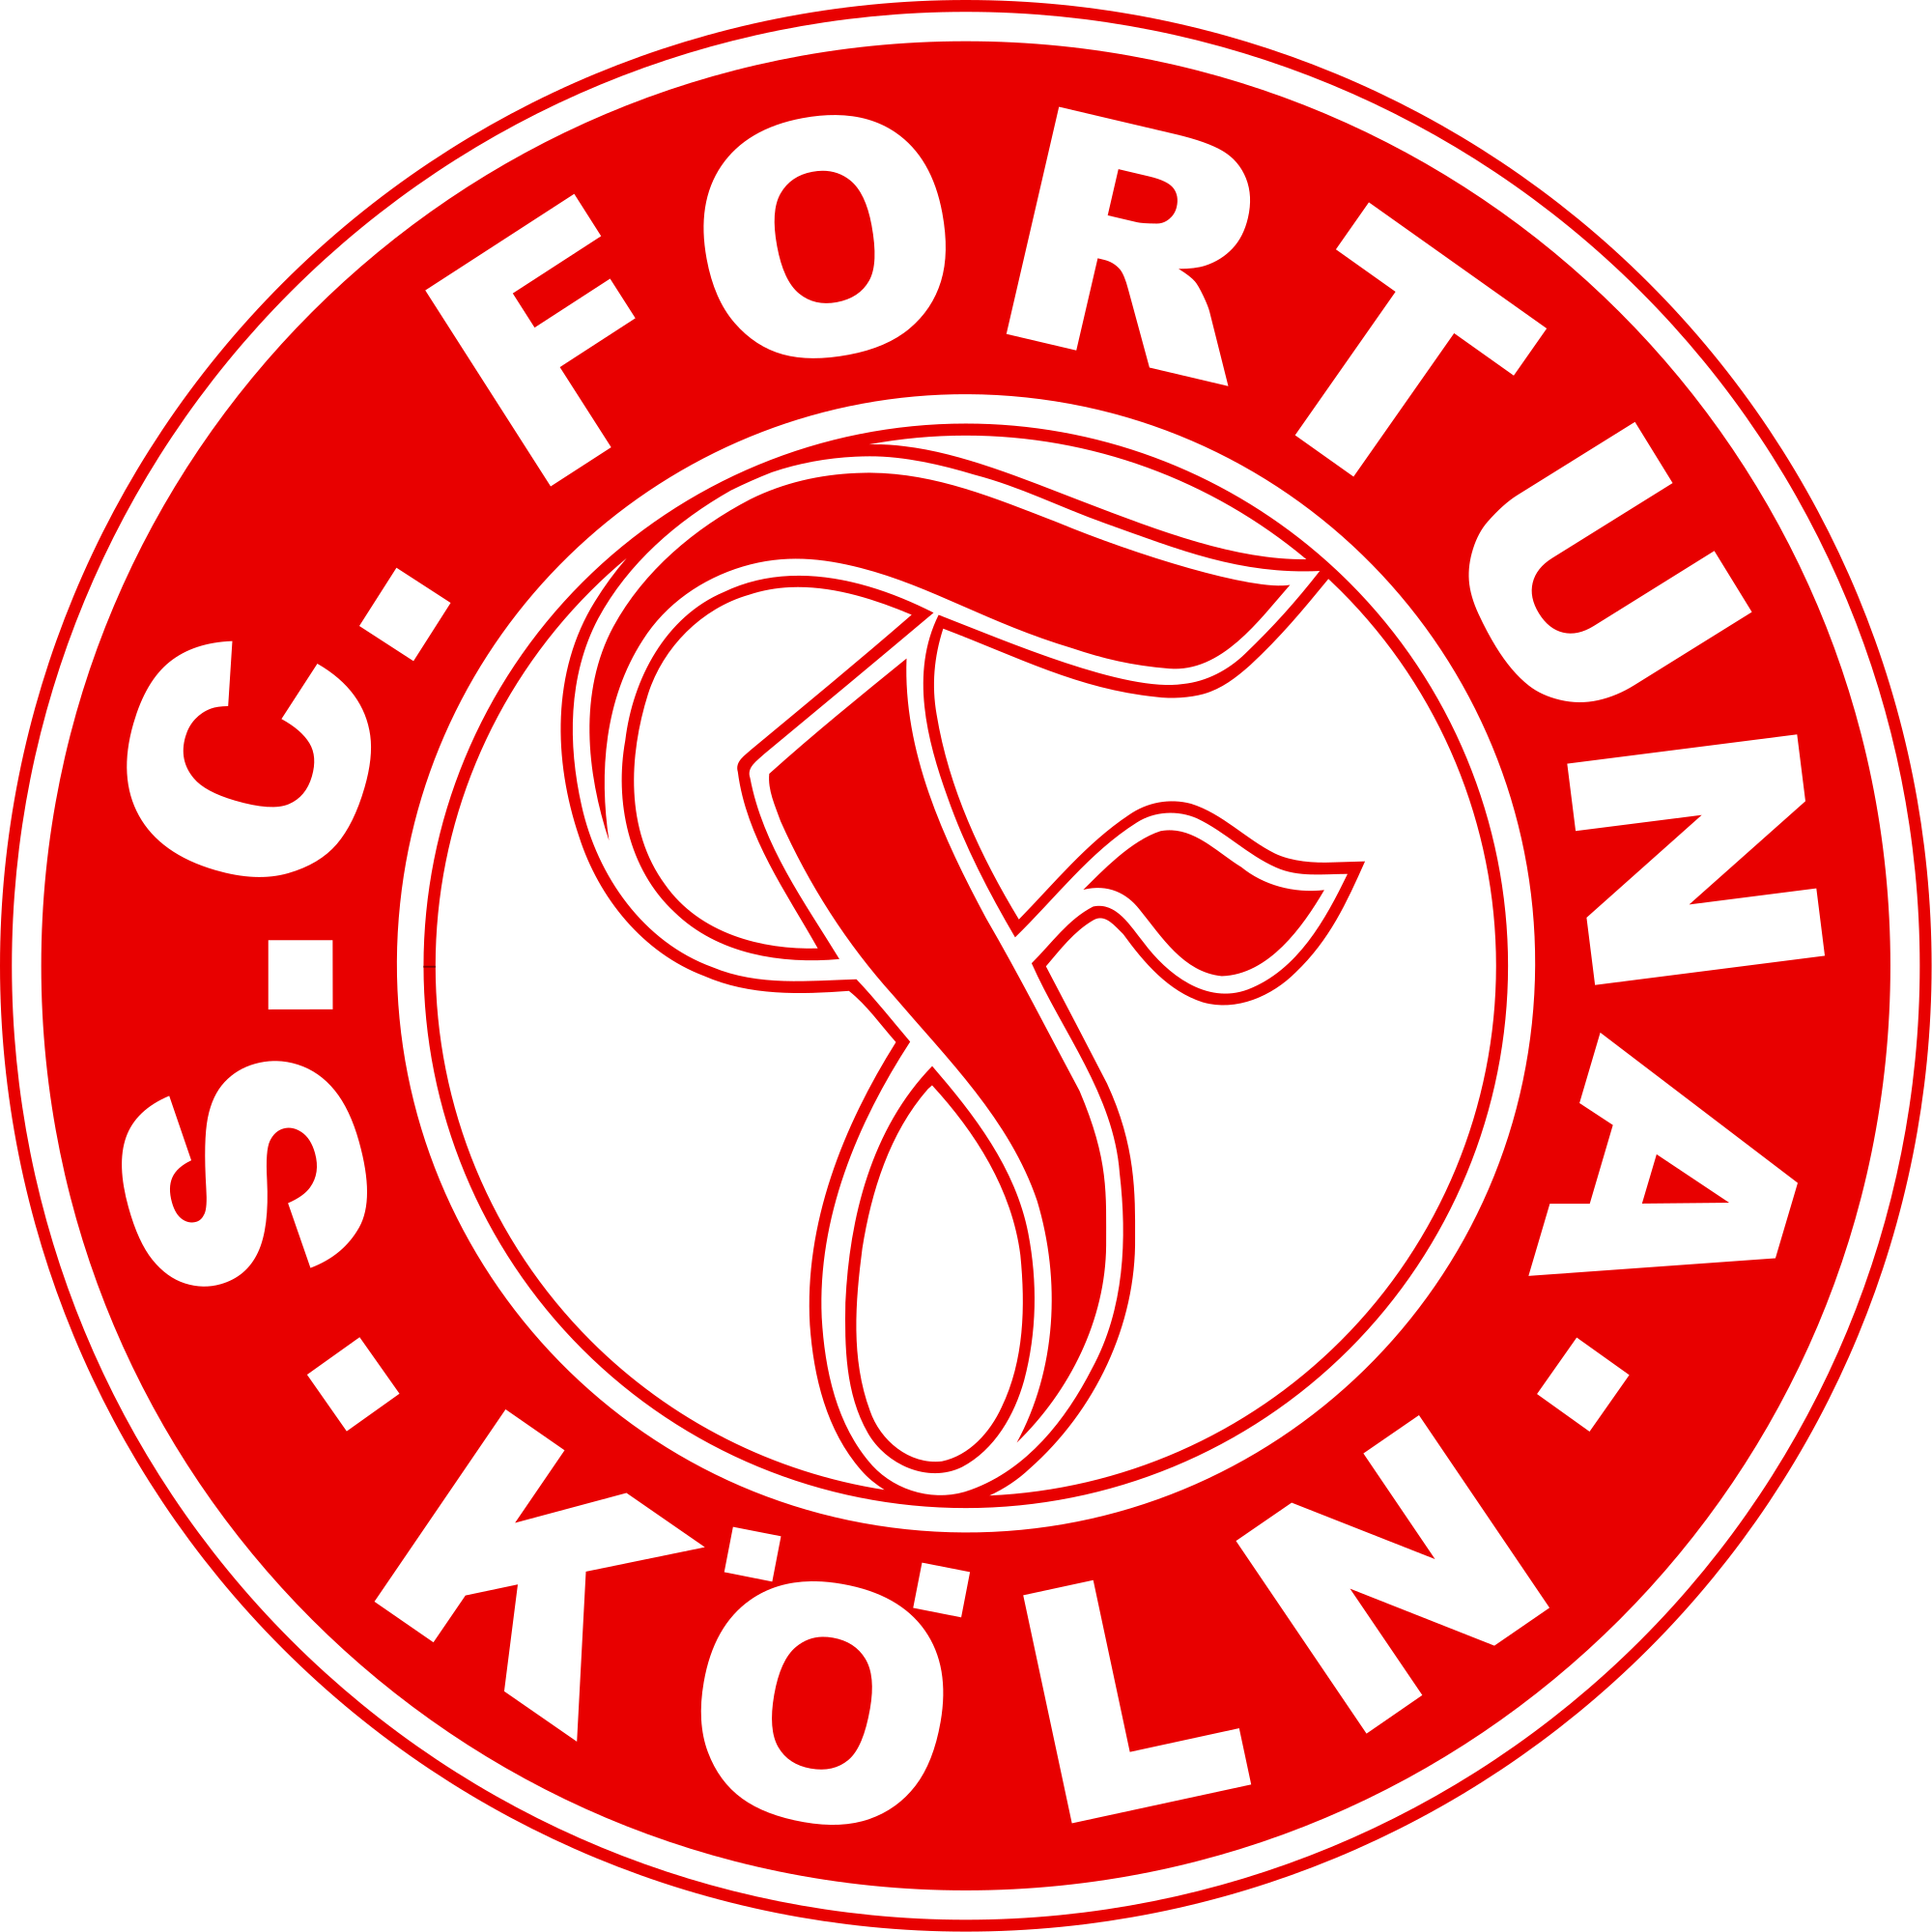 https://upload.wikimedia.org/wikipedia/commons/thumb/2/22/SC_Fortuna_Koln.svg/2000px-SC_Fortuna_Koln.svg.png